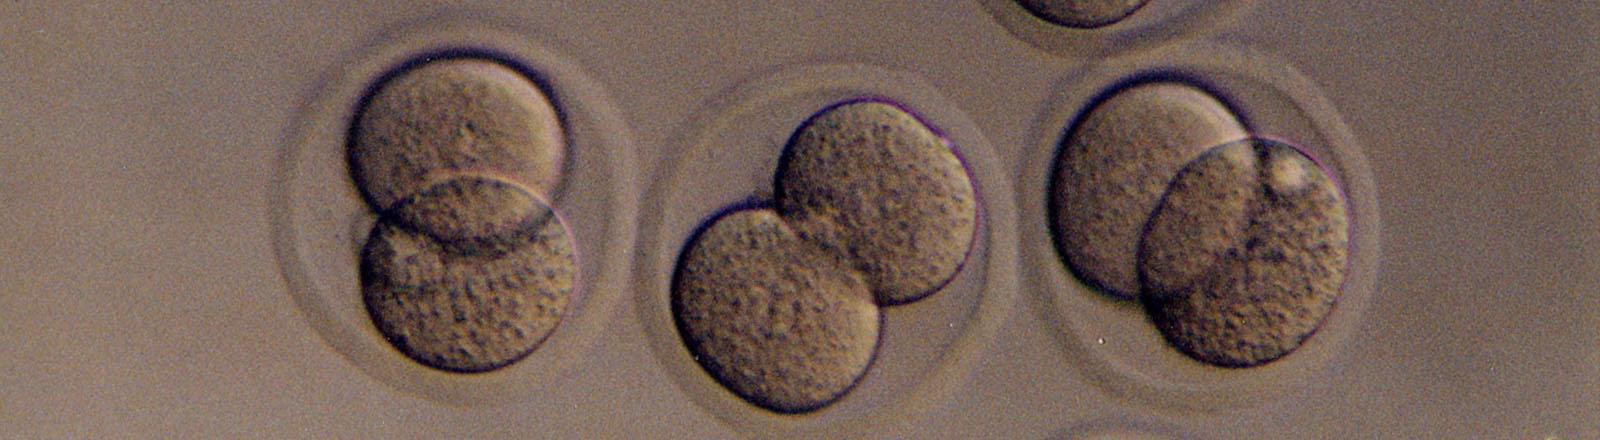 Biology embryo image